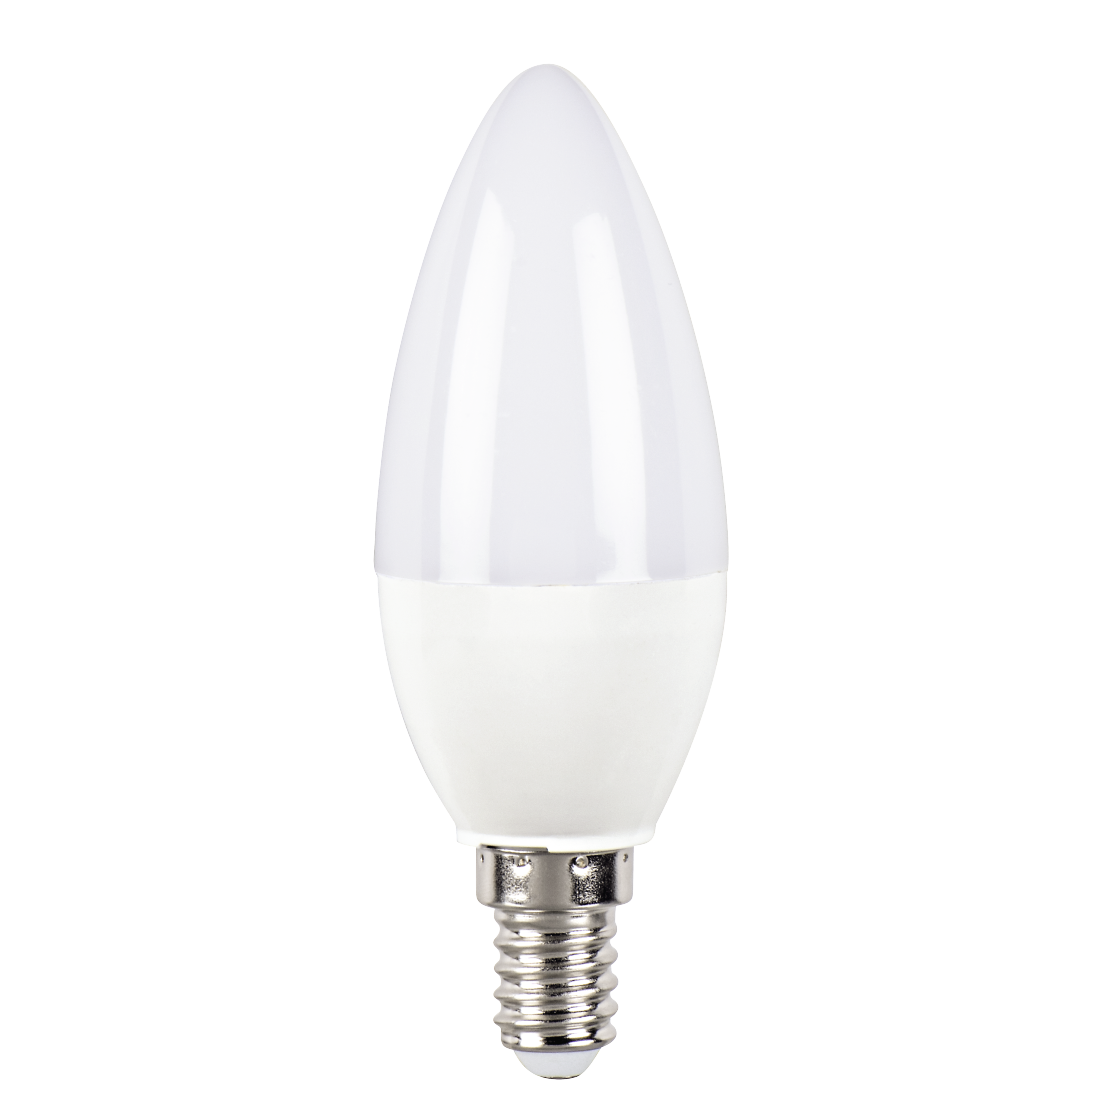 abx Druckfähige Abbildung - Xavax, LED-Lampe, E14, 470lm ersetzt 40W, Kerzenlampe, Tageslicht